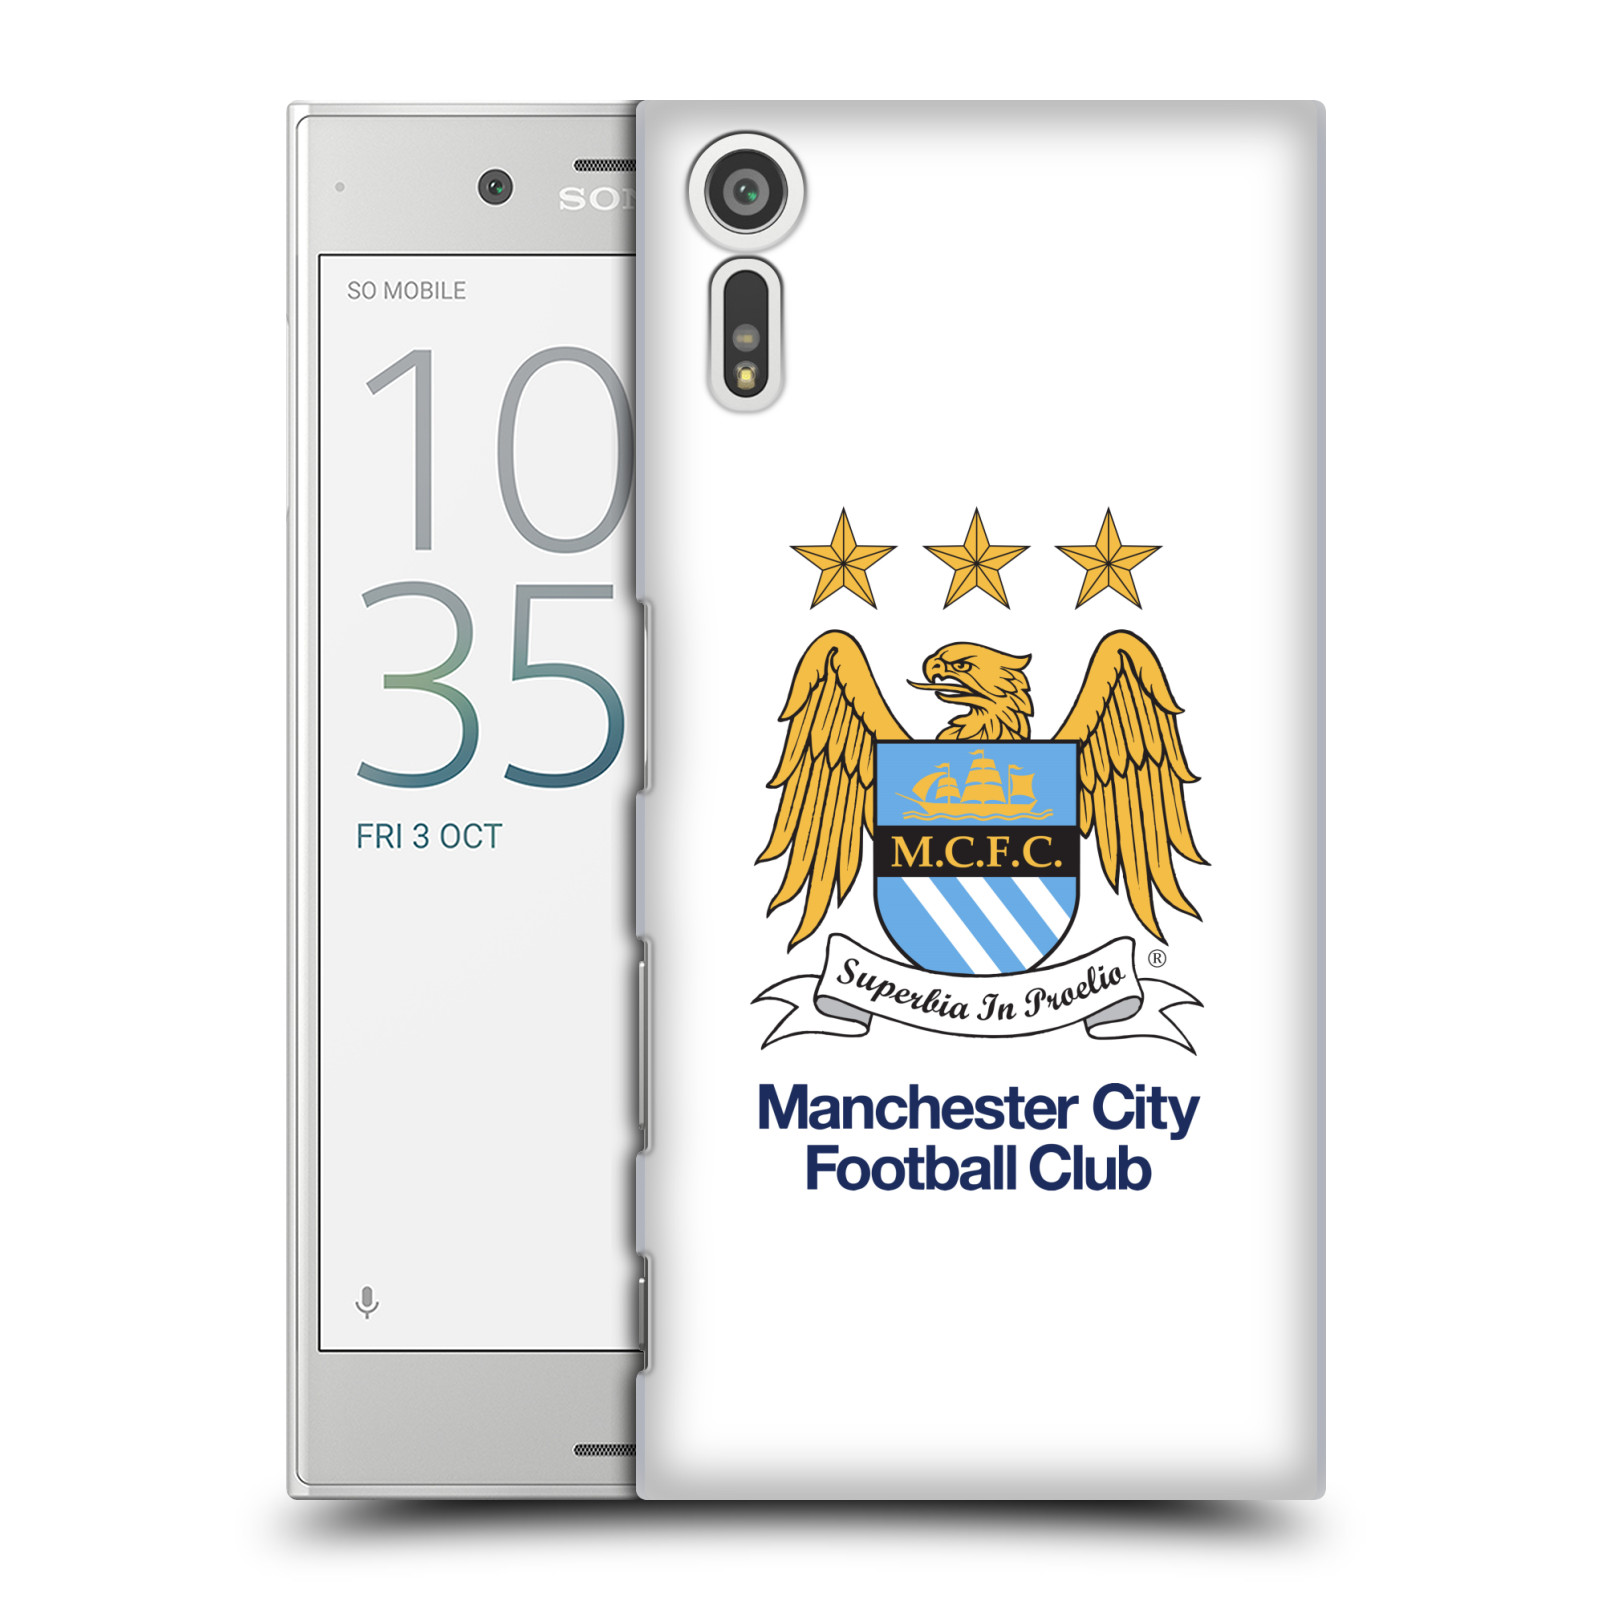 HEAD CASE plastový obal na mobil Sony Xperia XZ Fotbalový klub Manchester City bílé pozadí velký znak pták